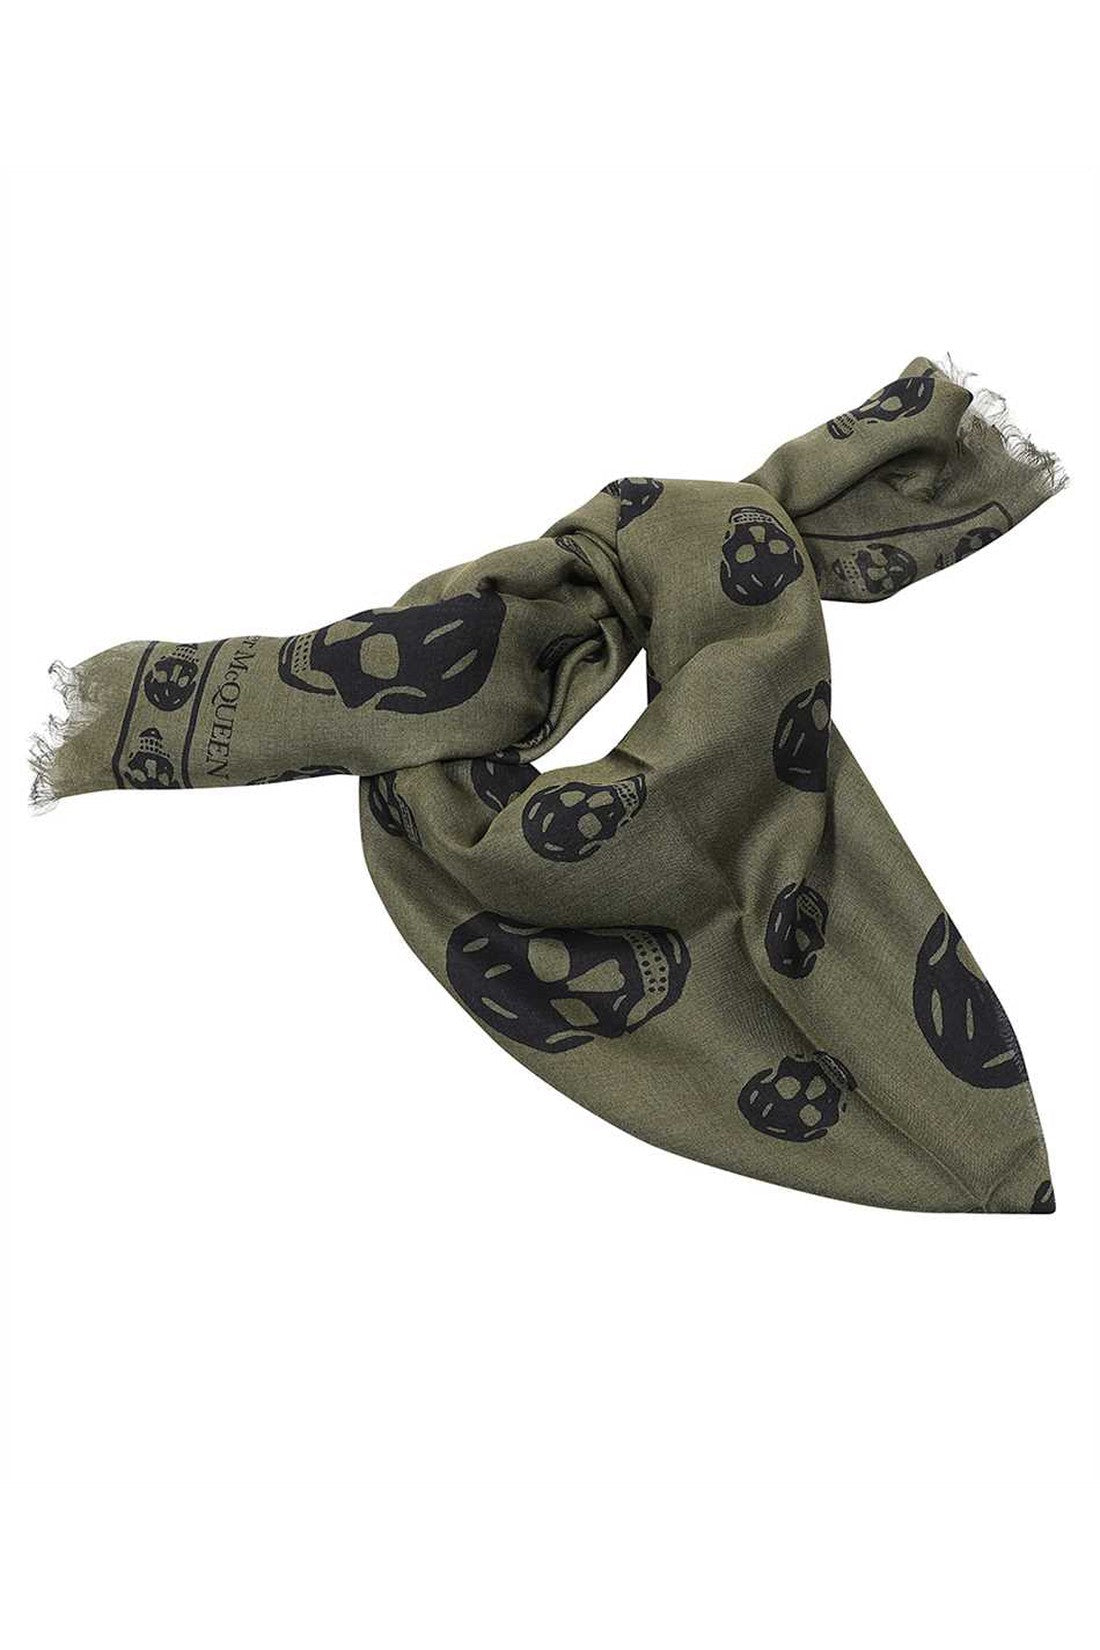 Skull print scarf